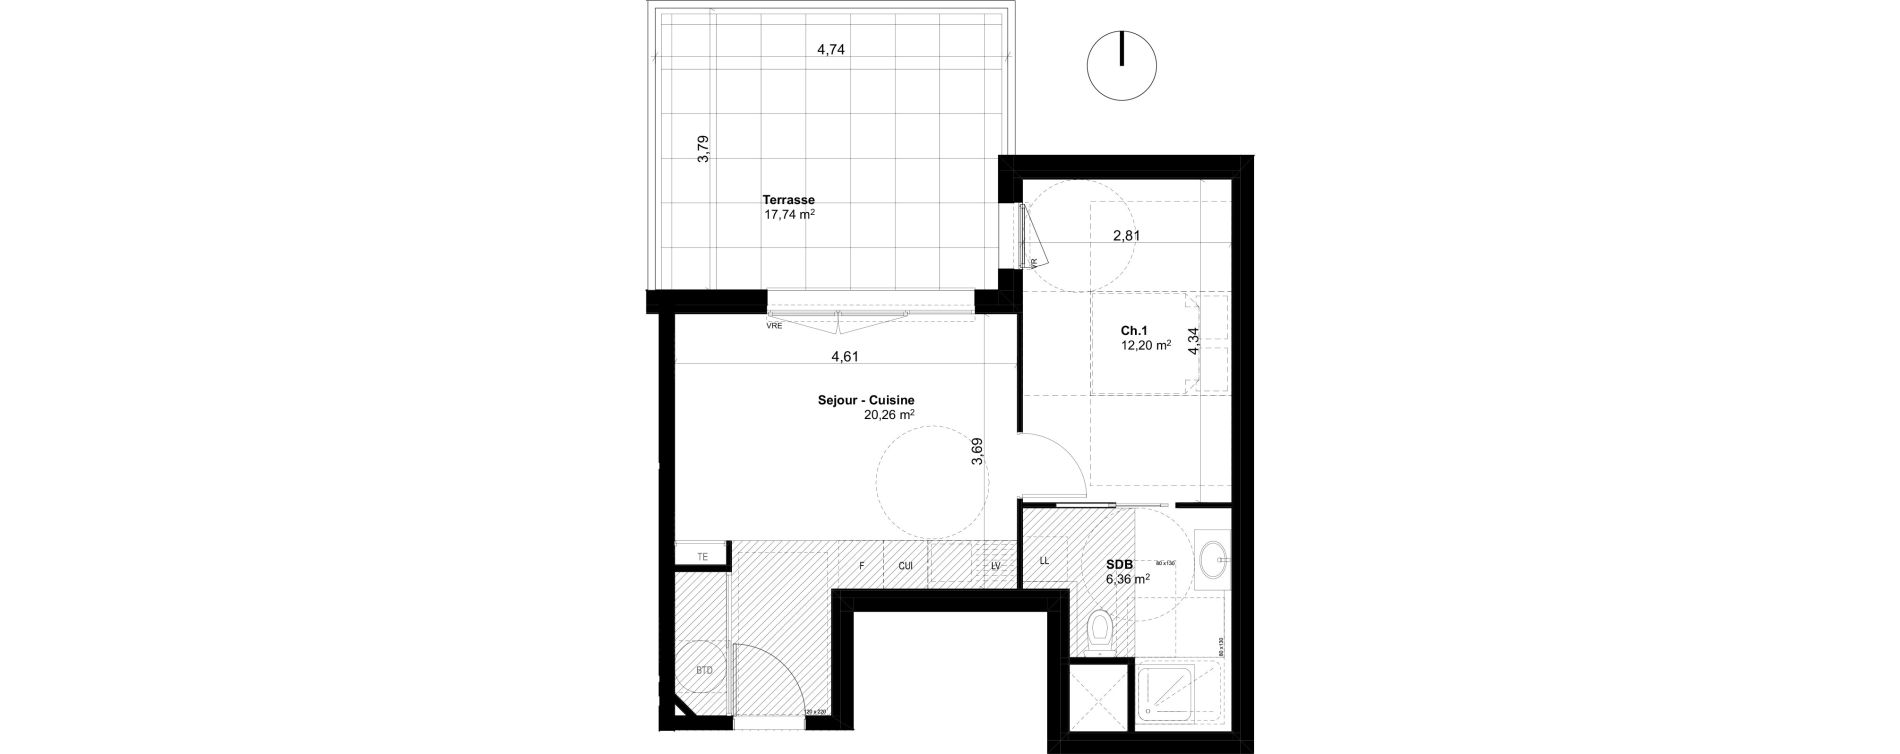 Appartement T2 de 38,82 m2 &agrave; Ventabren L heritiere